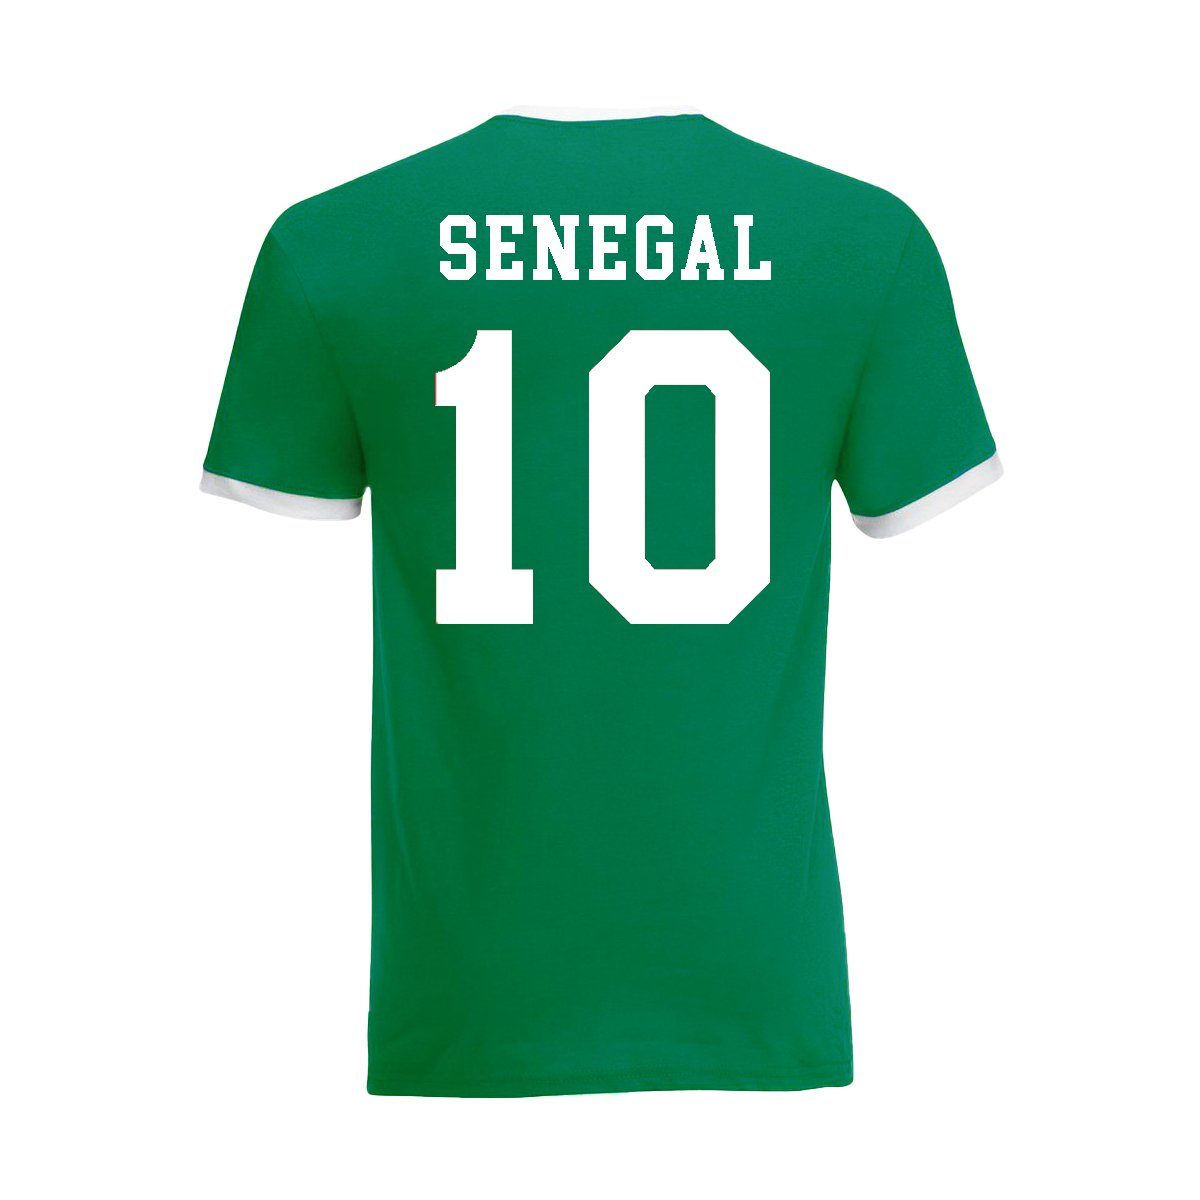 mit trendigem Youth Motiv T-Shirt Look Senegal im Trikot Designz Fußball Herren Shirt